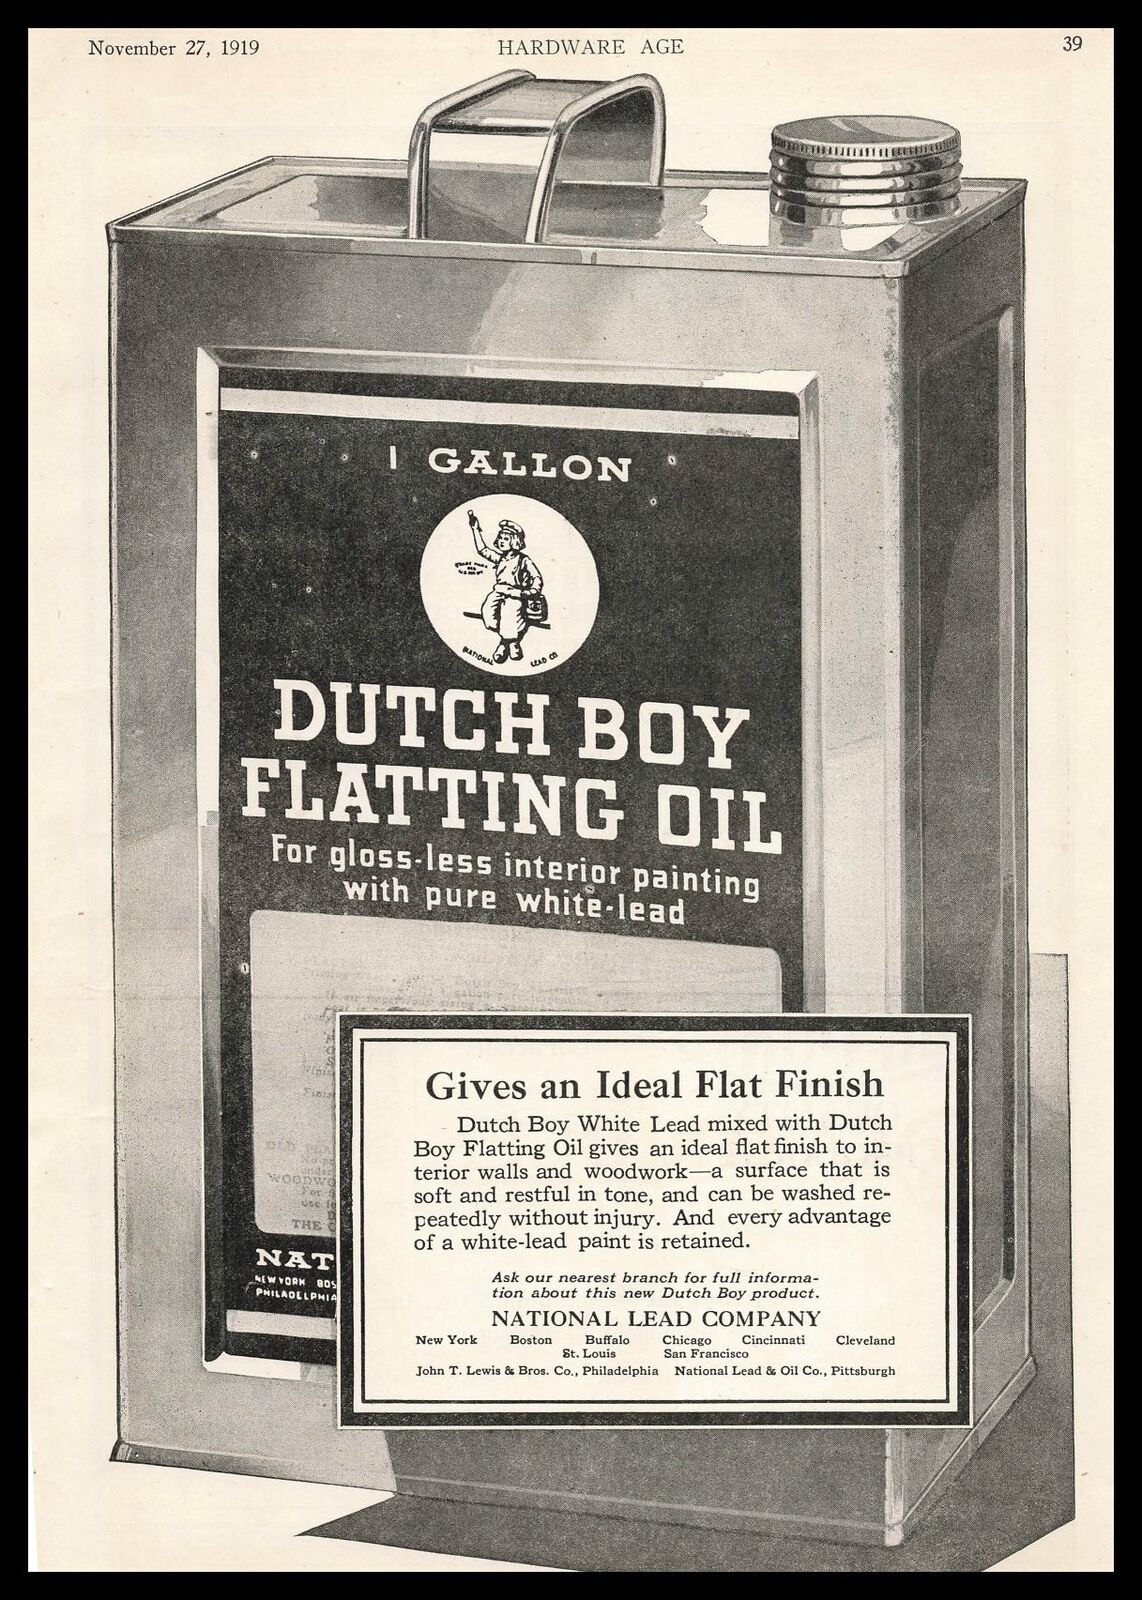 1919 Dutch Boy Flatting Oil 1 Gallon Can National Lead Company Vintage Print Ad